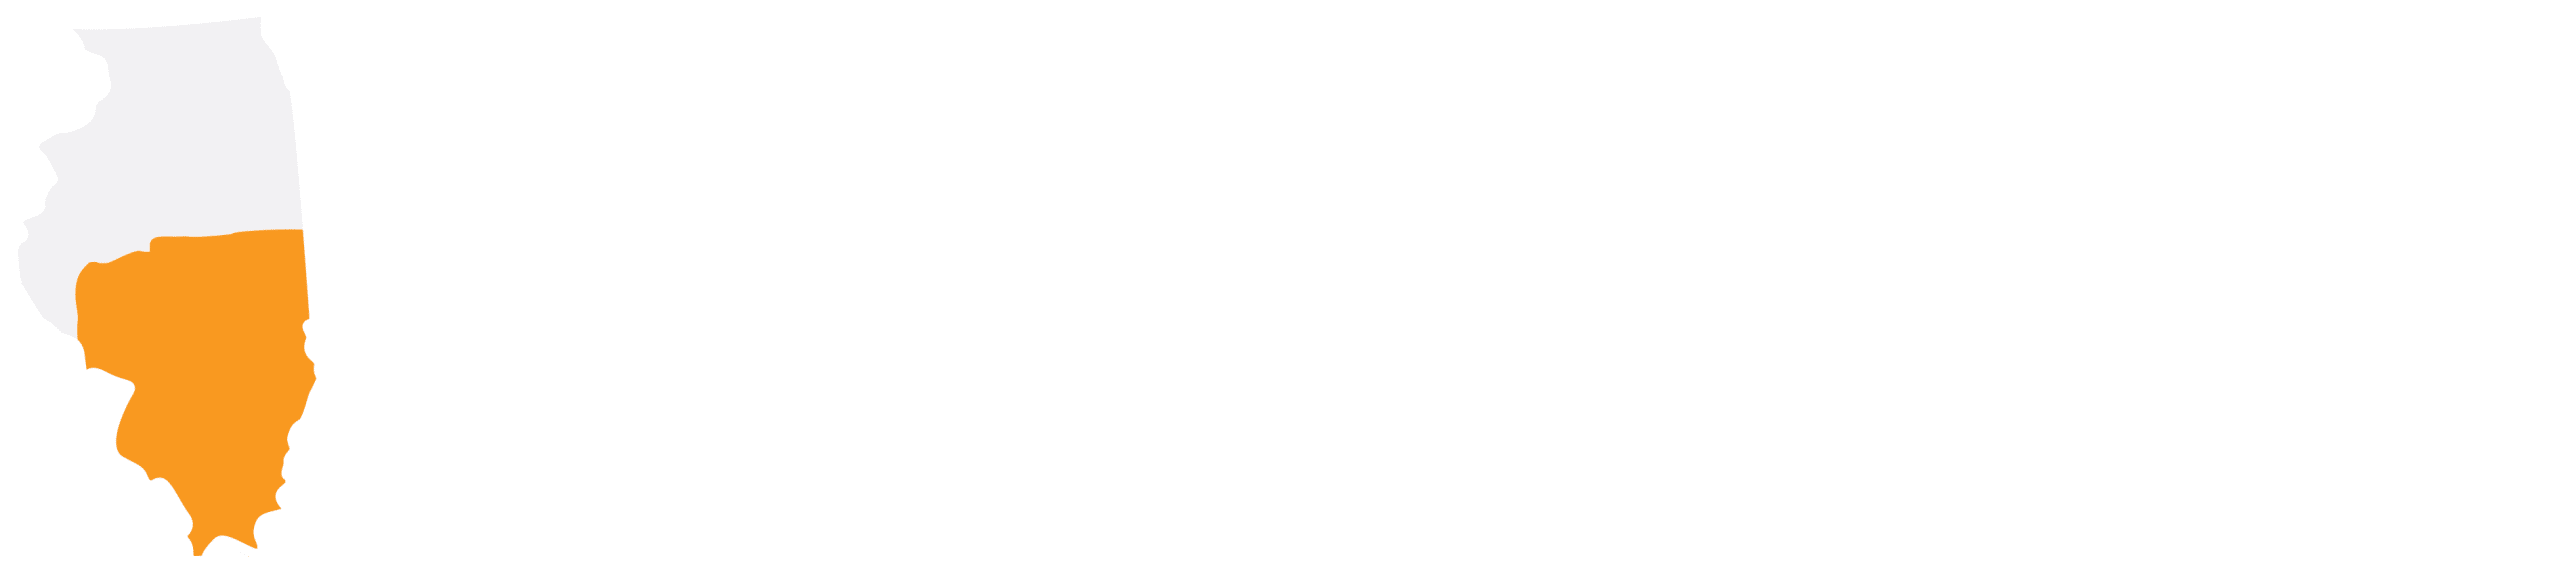 Downstate Illinois Laborers' District Council